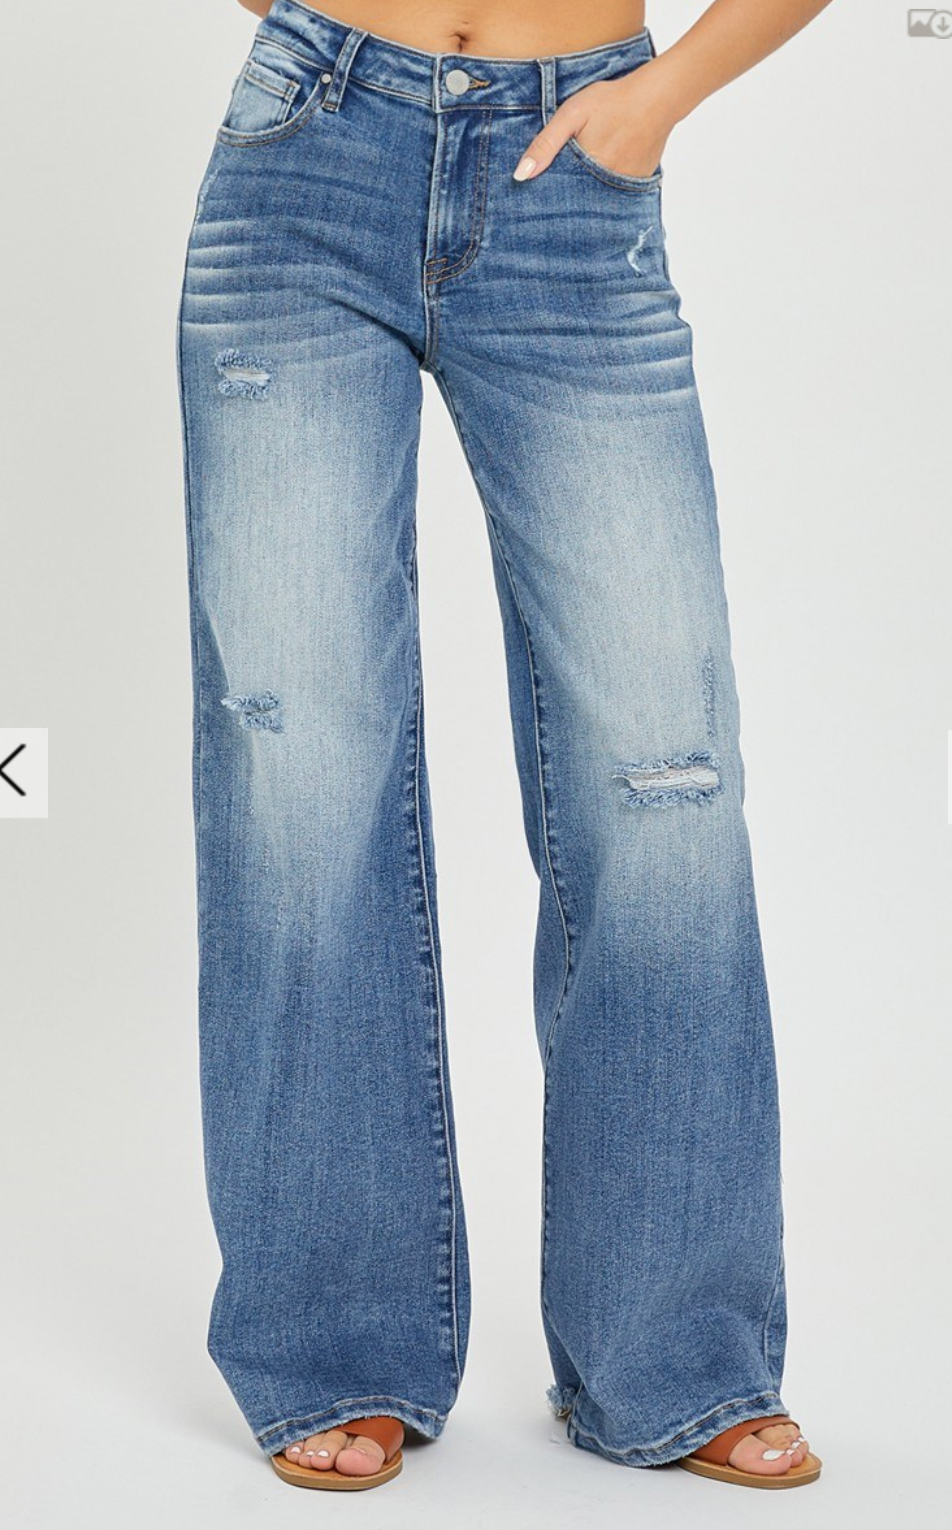 The Kacey Jeans